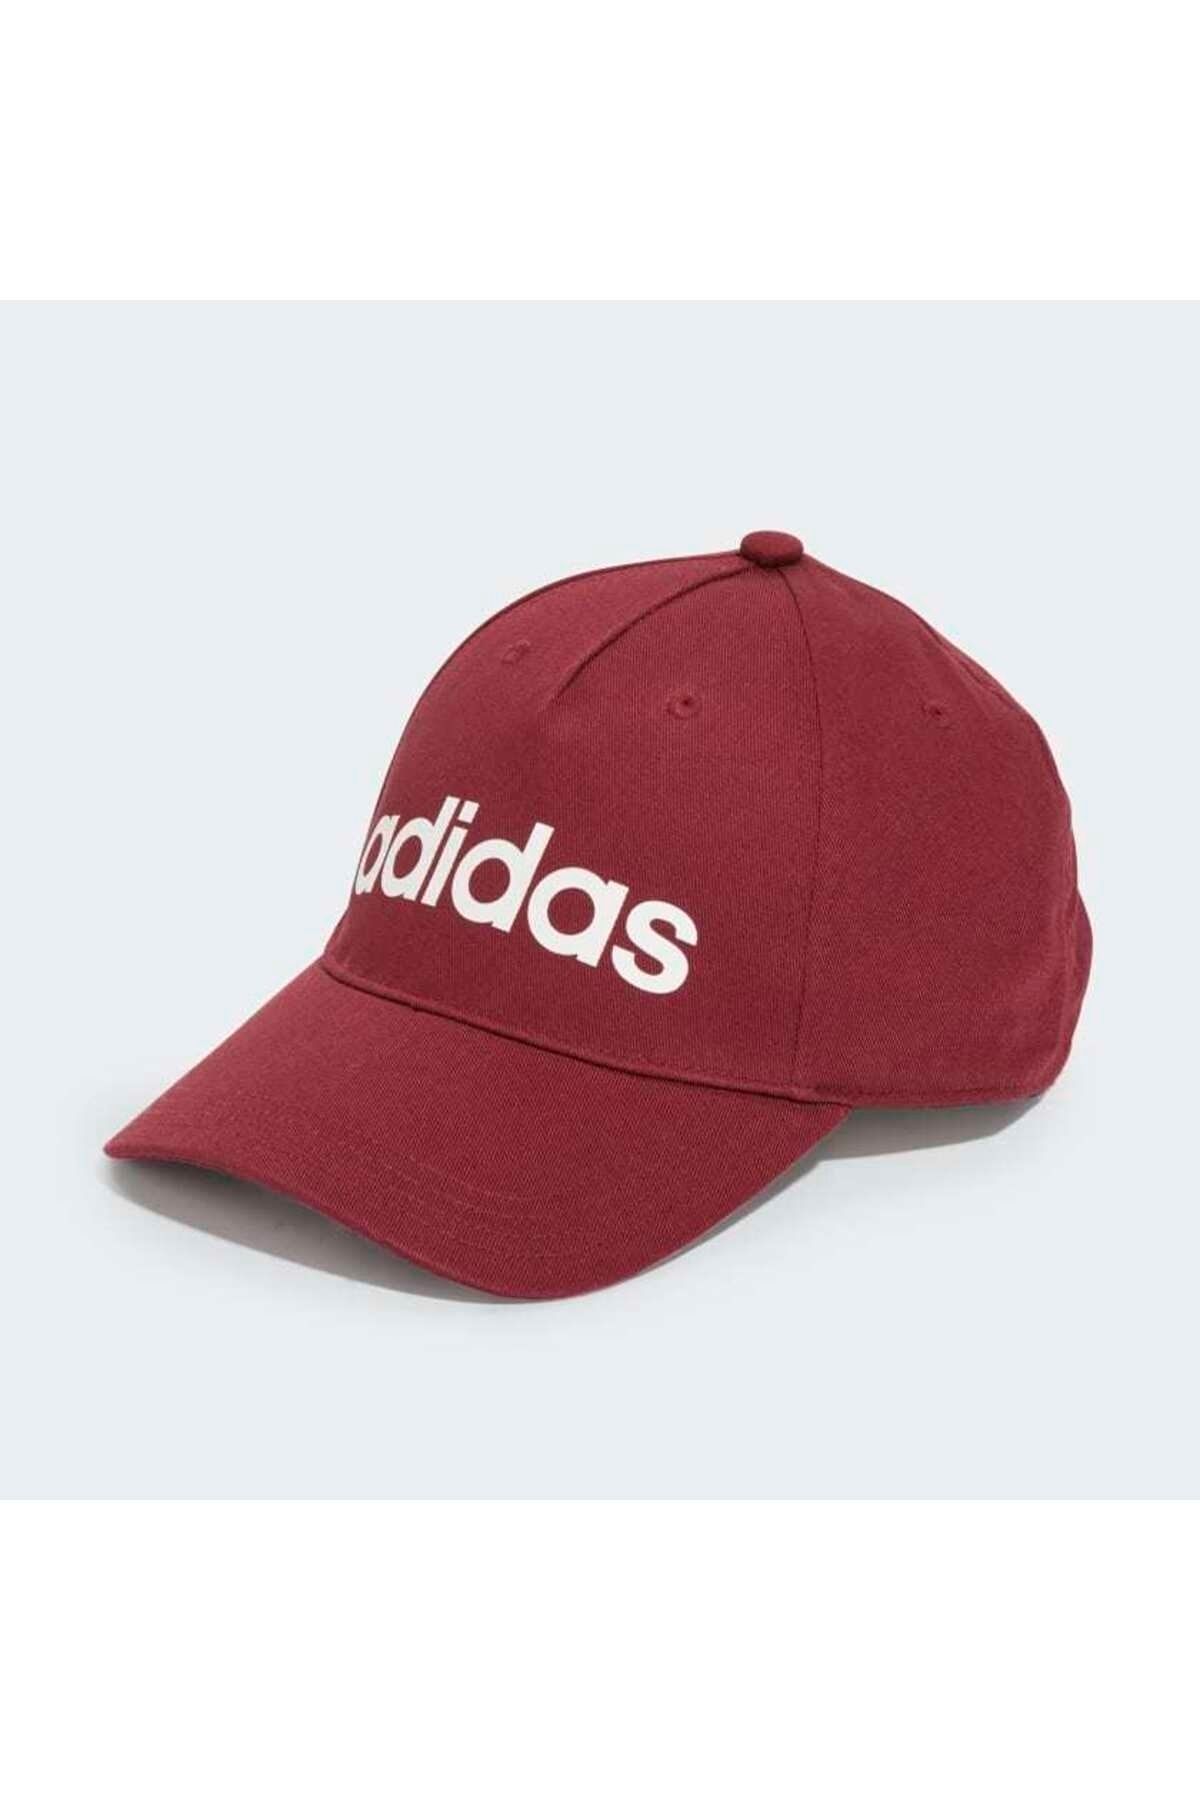 adidas günlük unisex bordo şapka